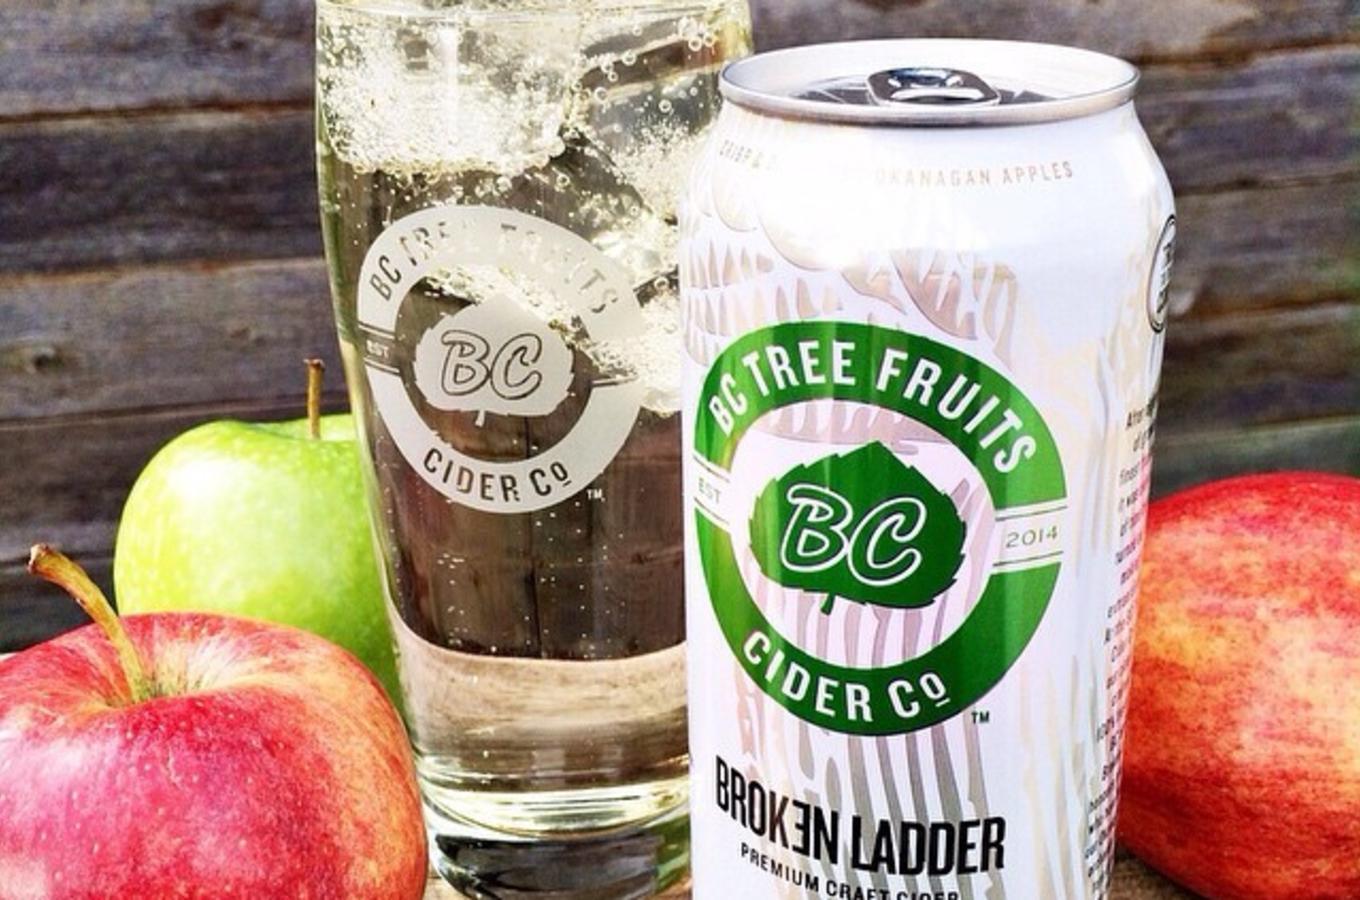 BC Tree Fruits Cider